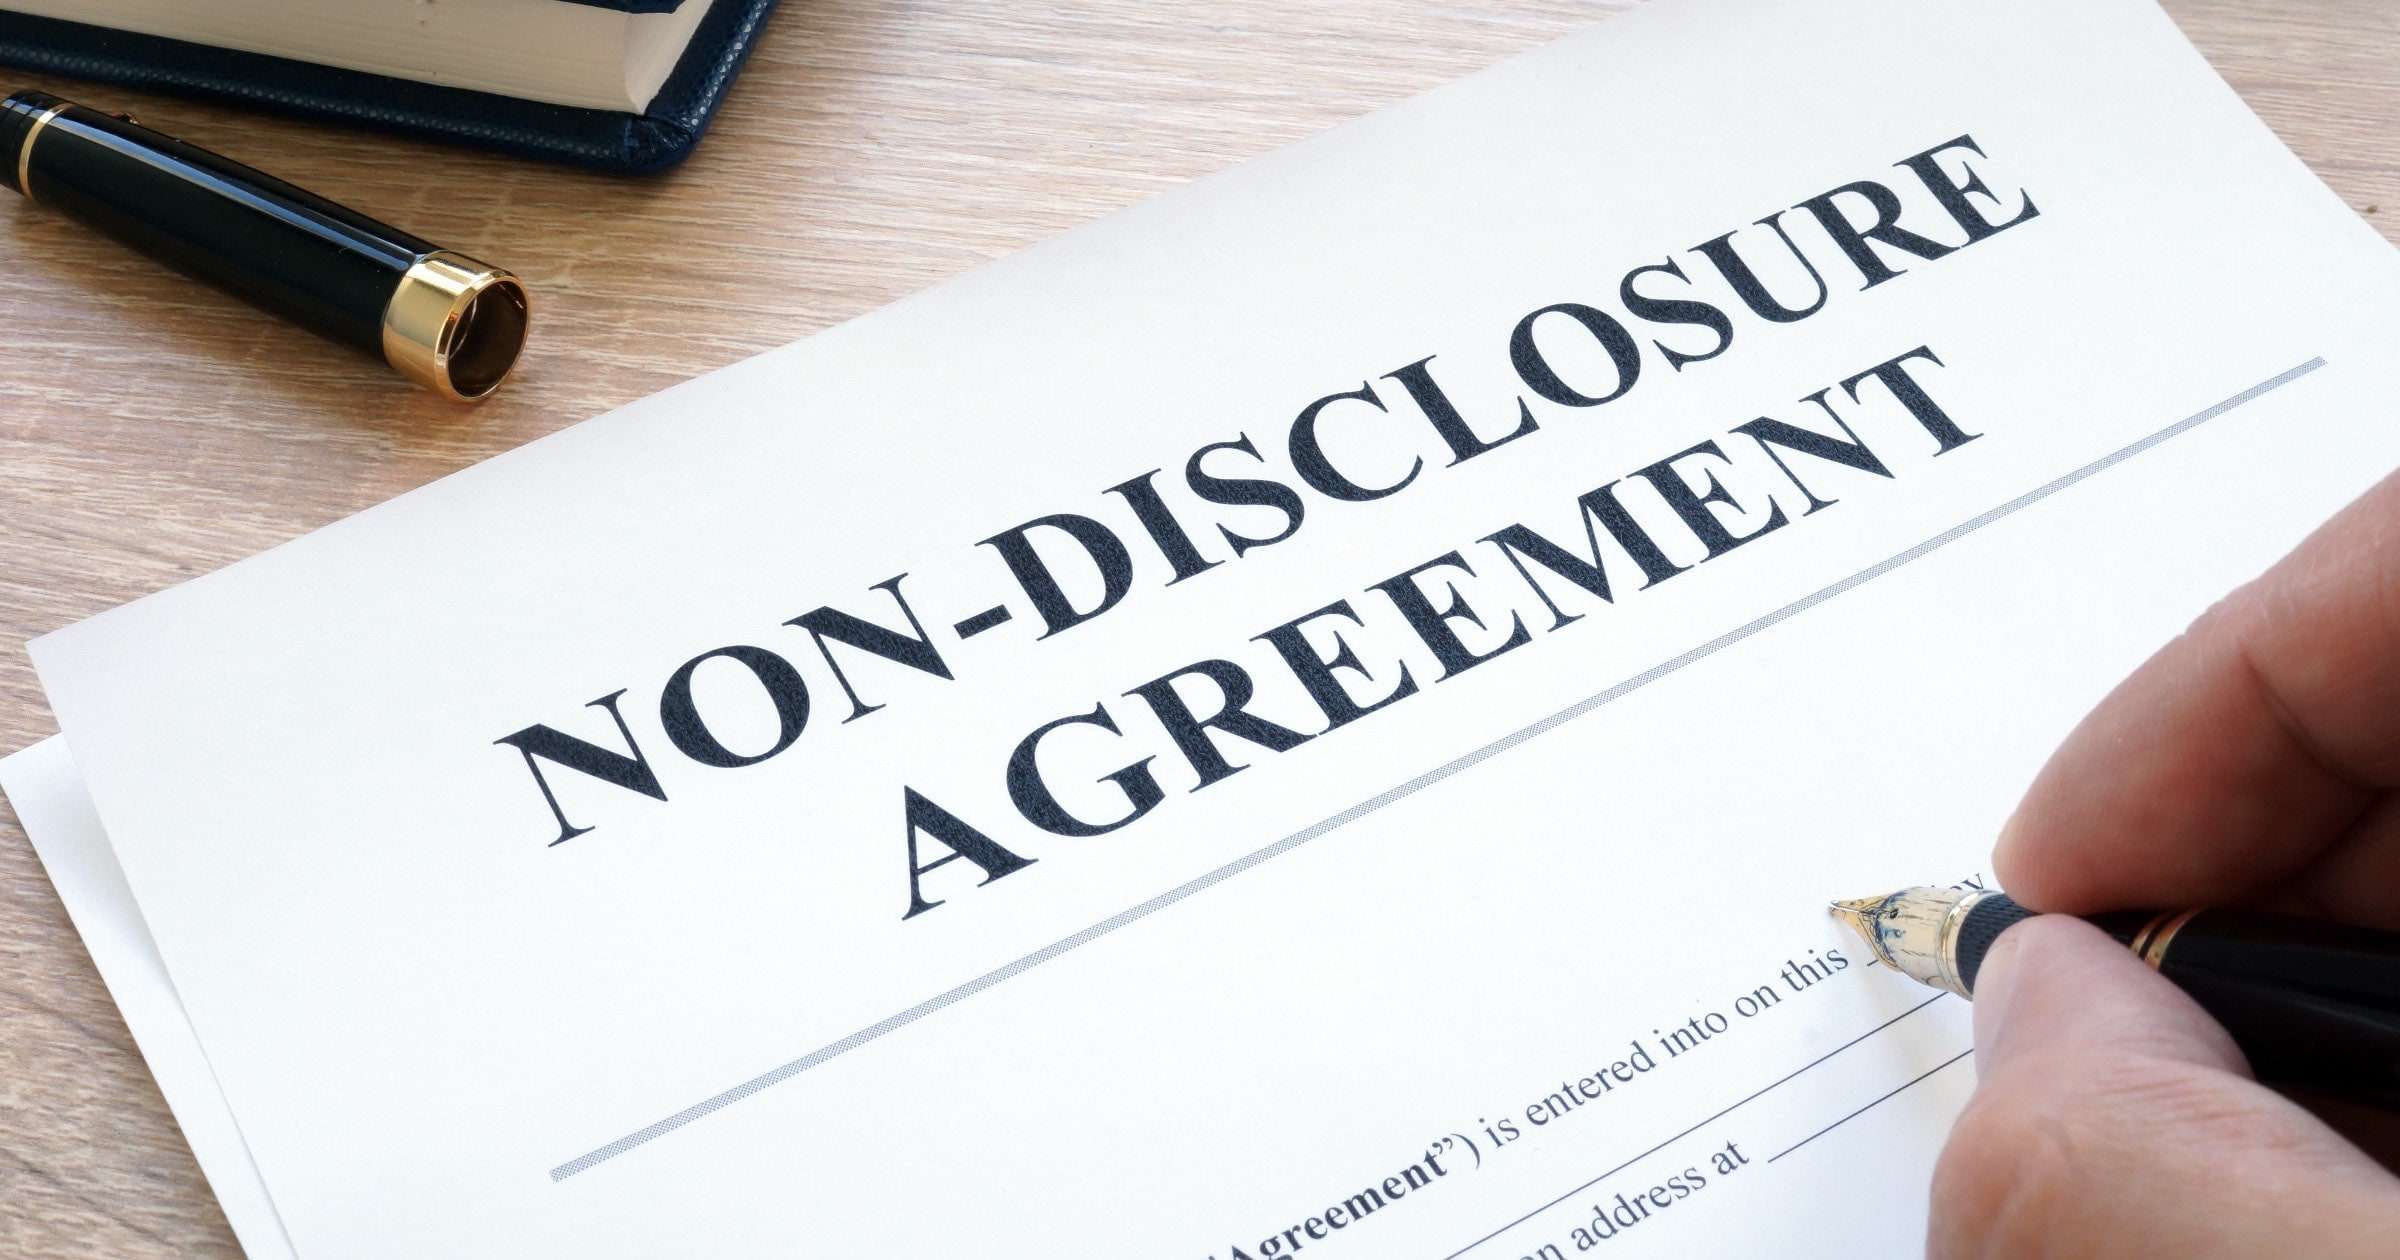 NDA nondisclosure agreement